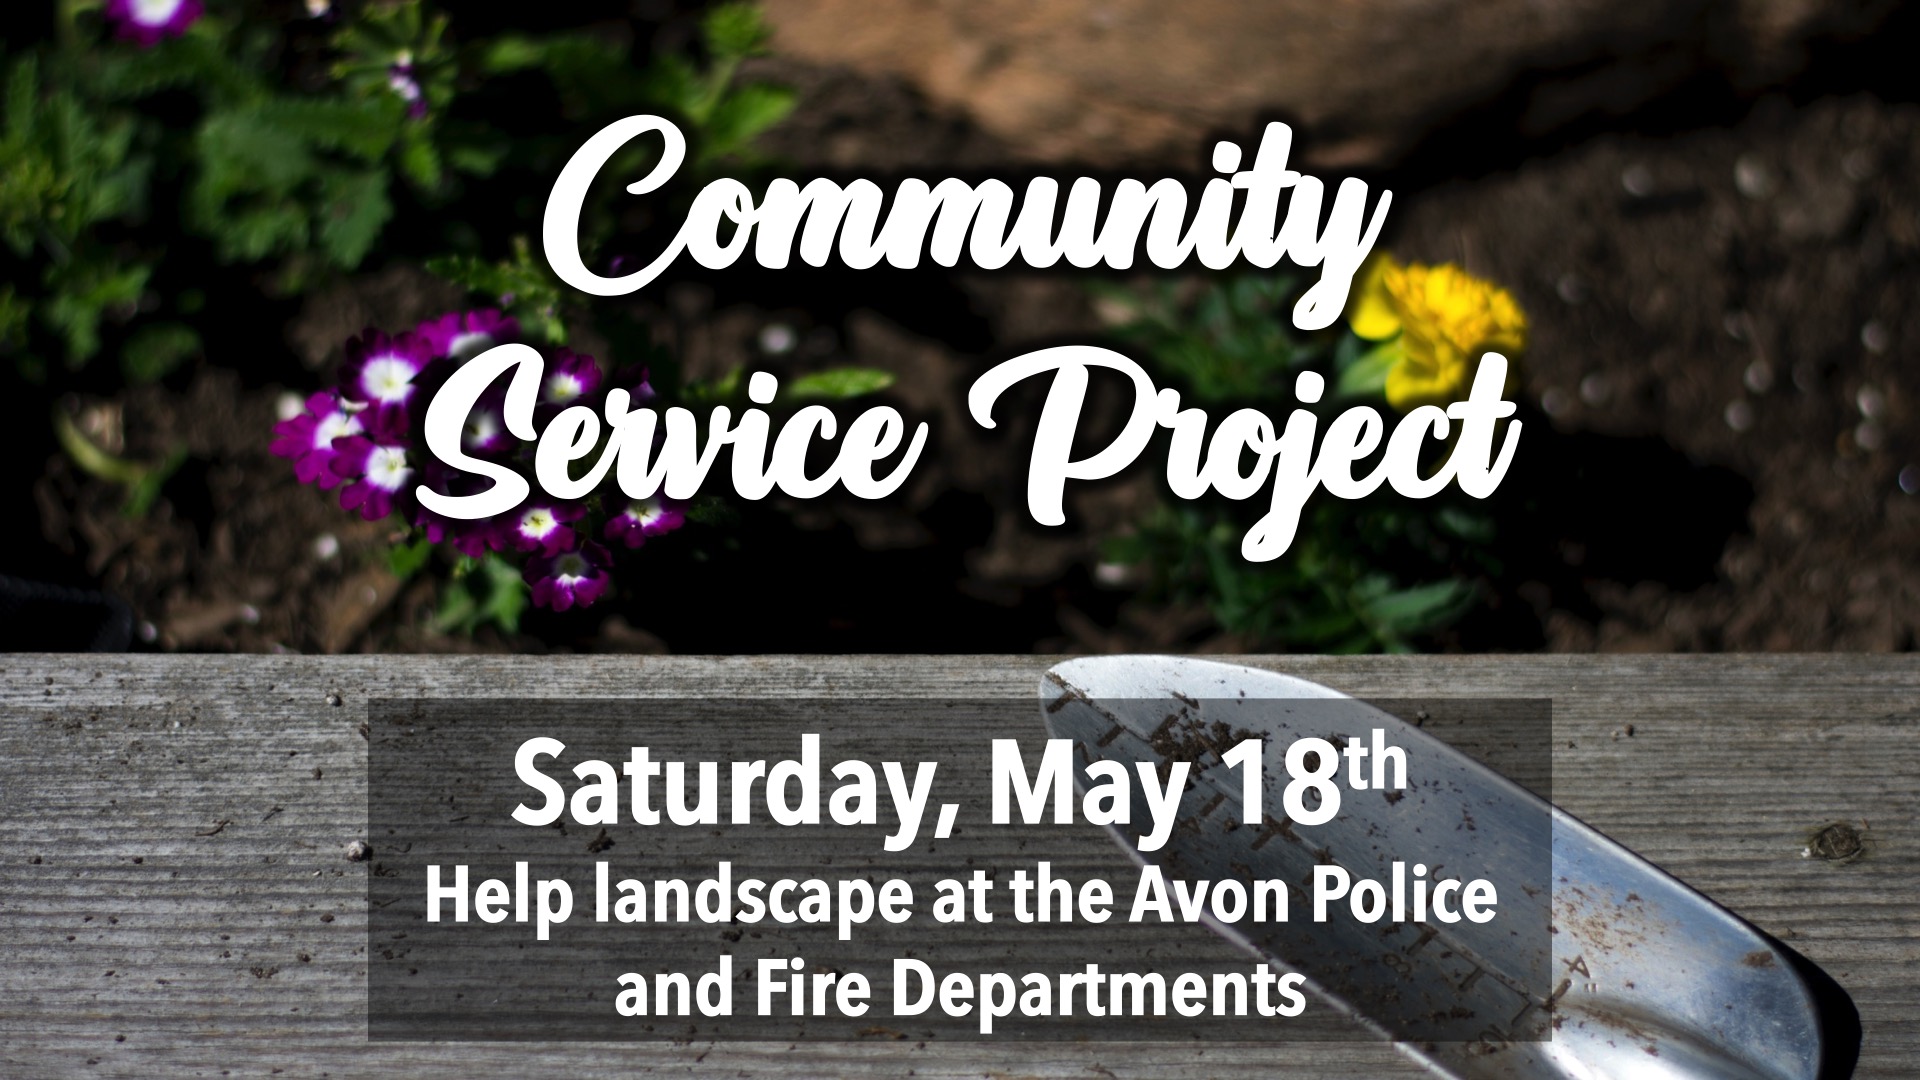 Community Service - Avon